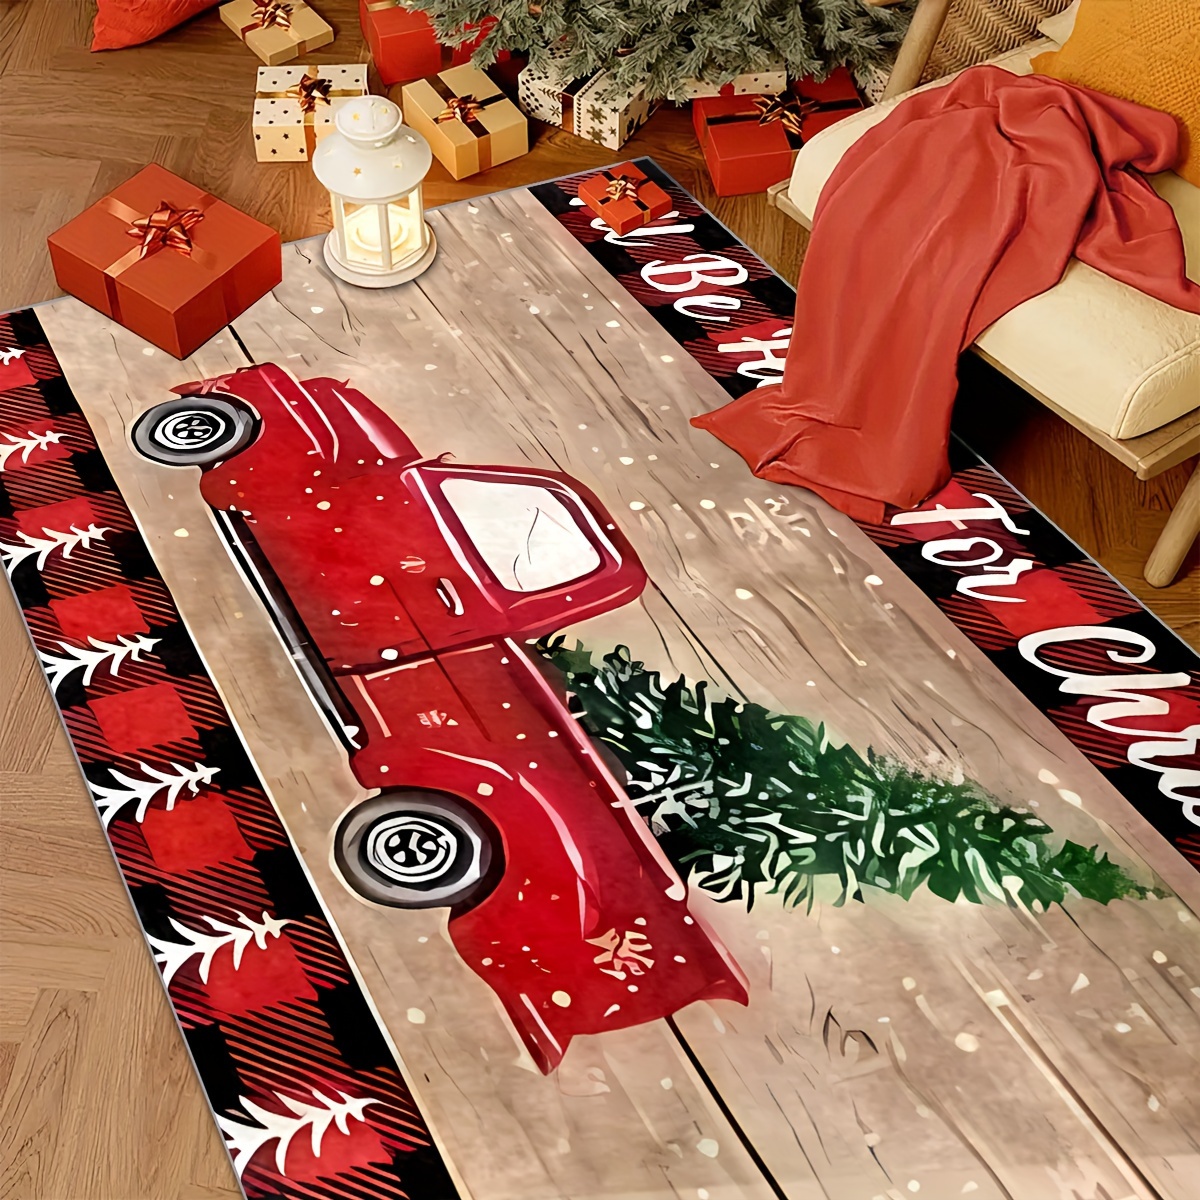 Merry Christmas Red Truck With Tree in Back Door Mat – Hera's